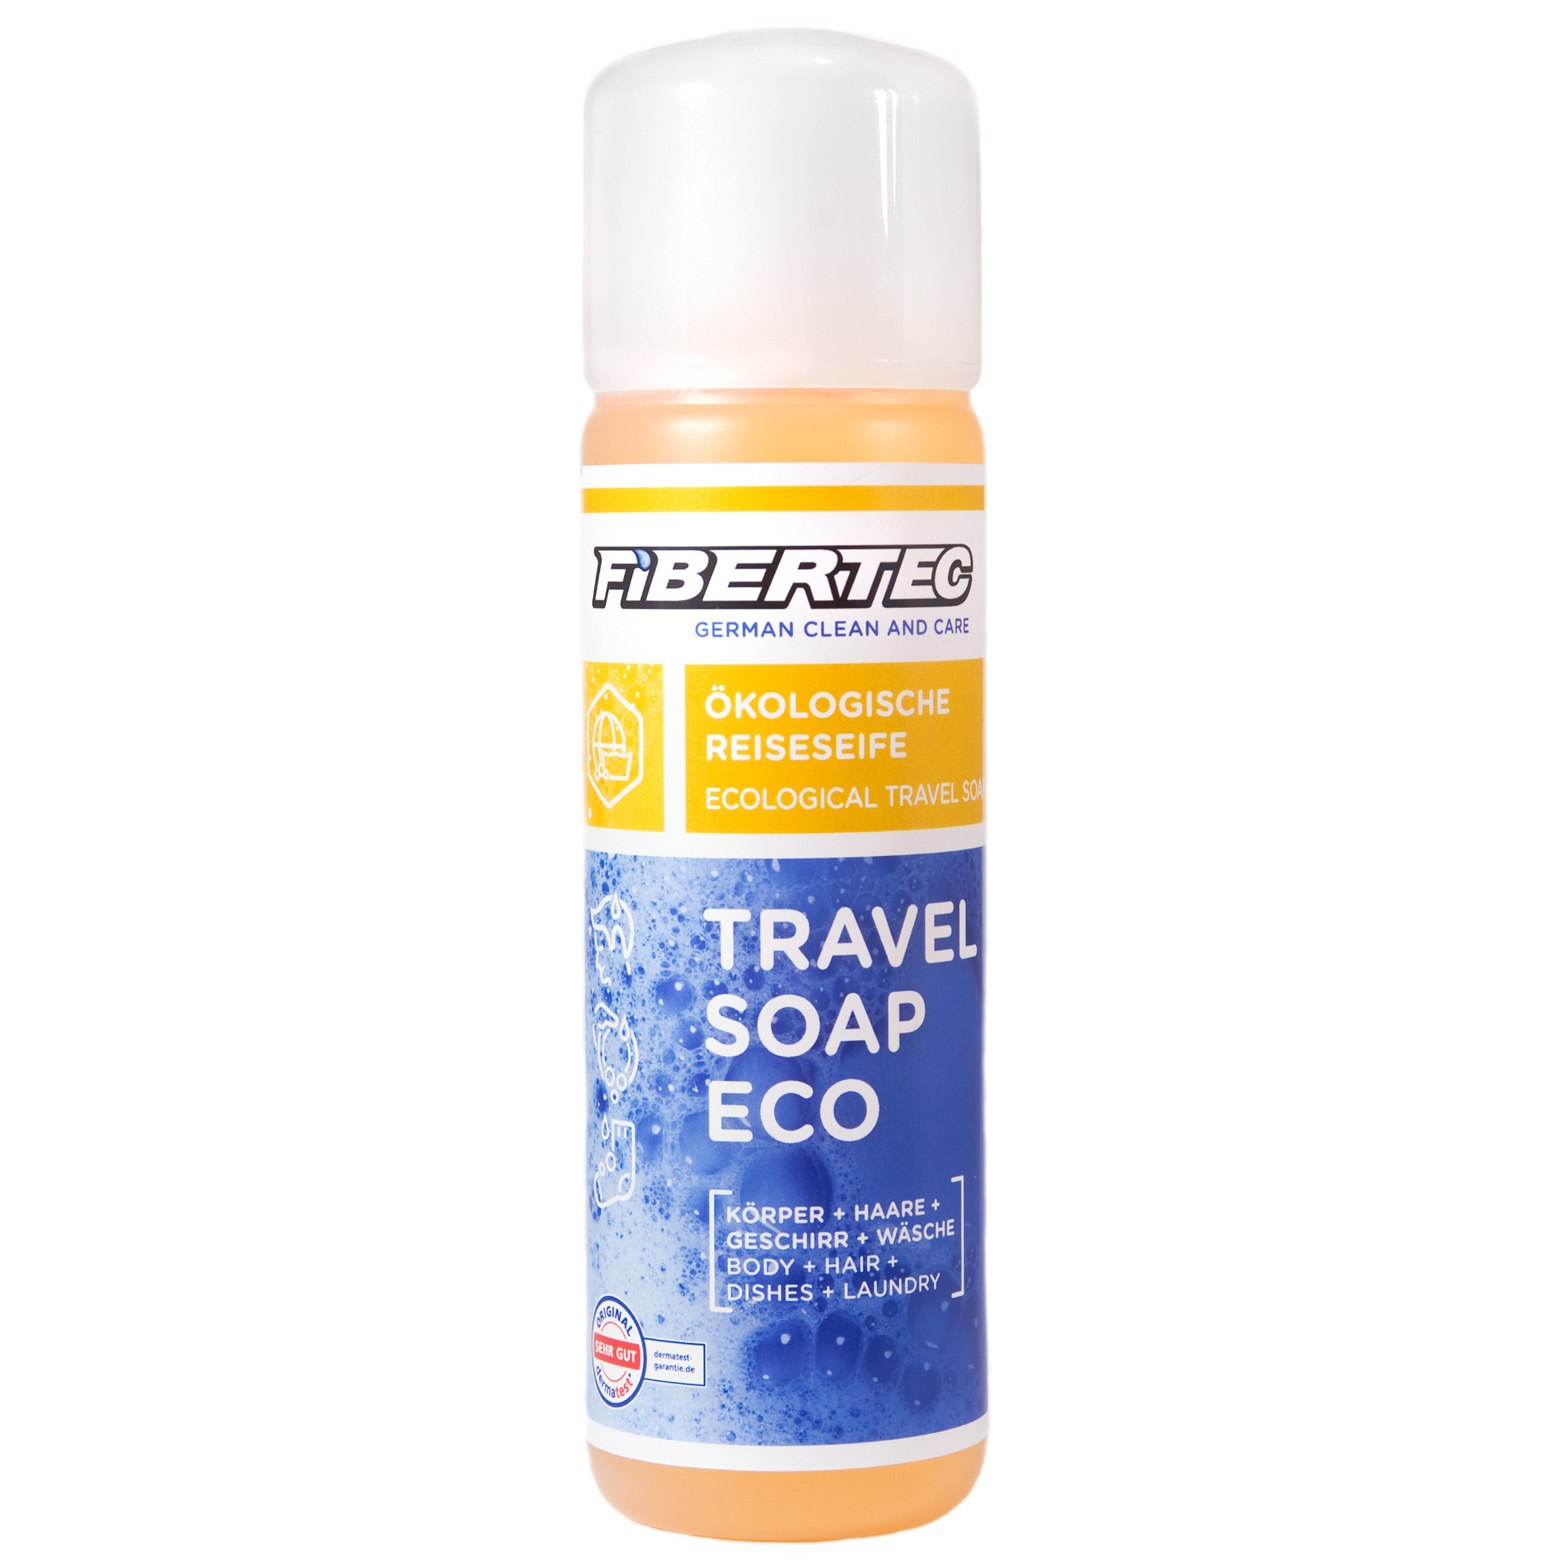 Produktbild von Fibertec Travel Soap Eco - 250ml